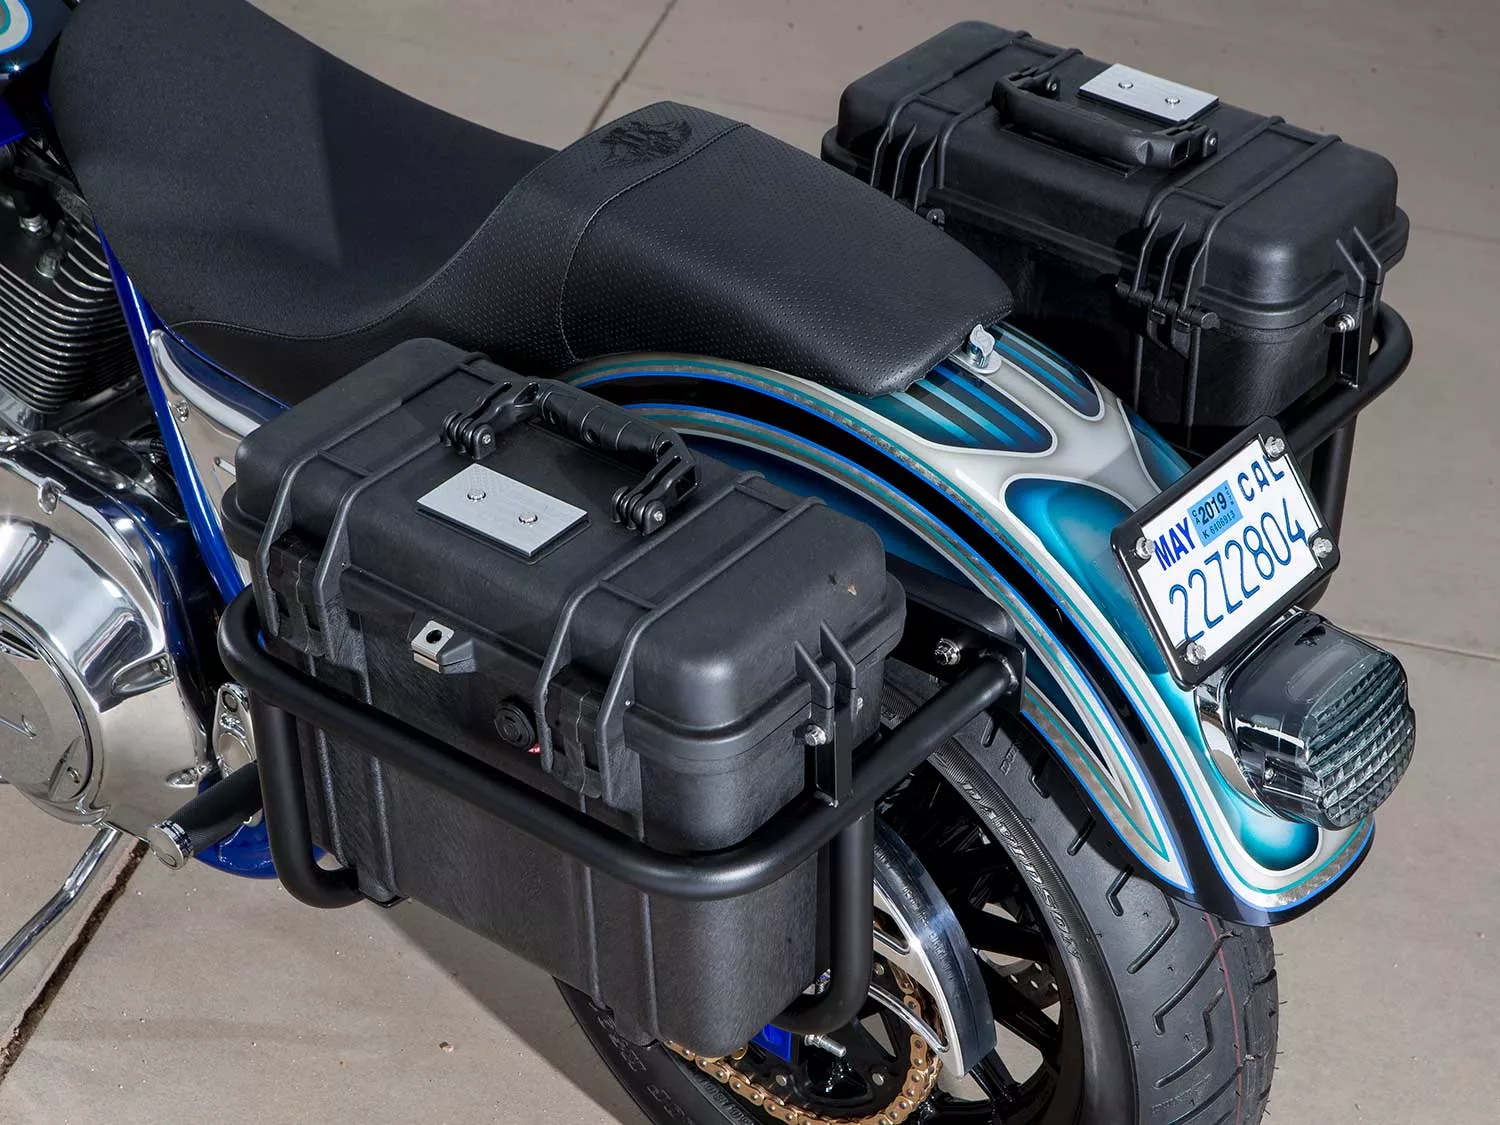 Harley-Davidson FXR with saddlebags.